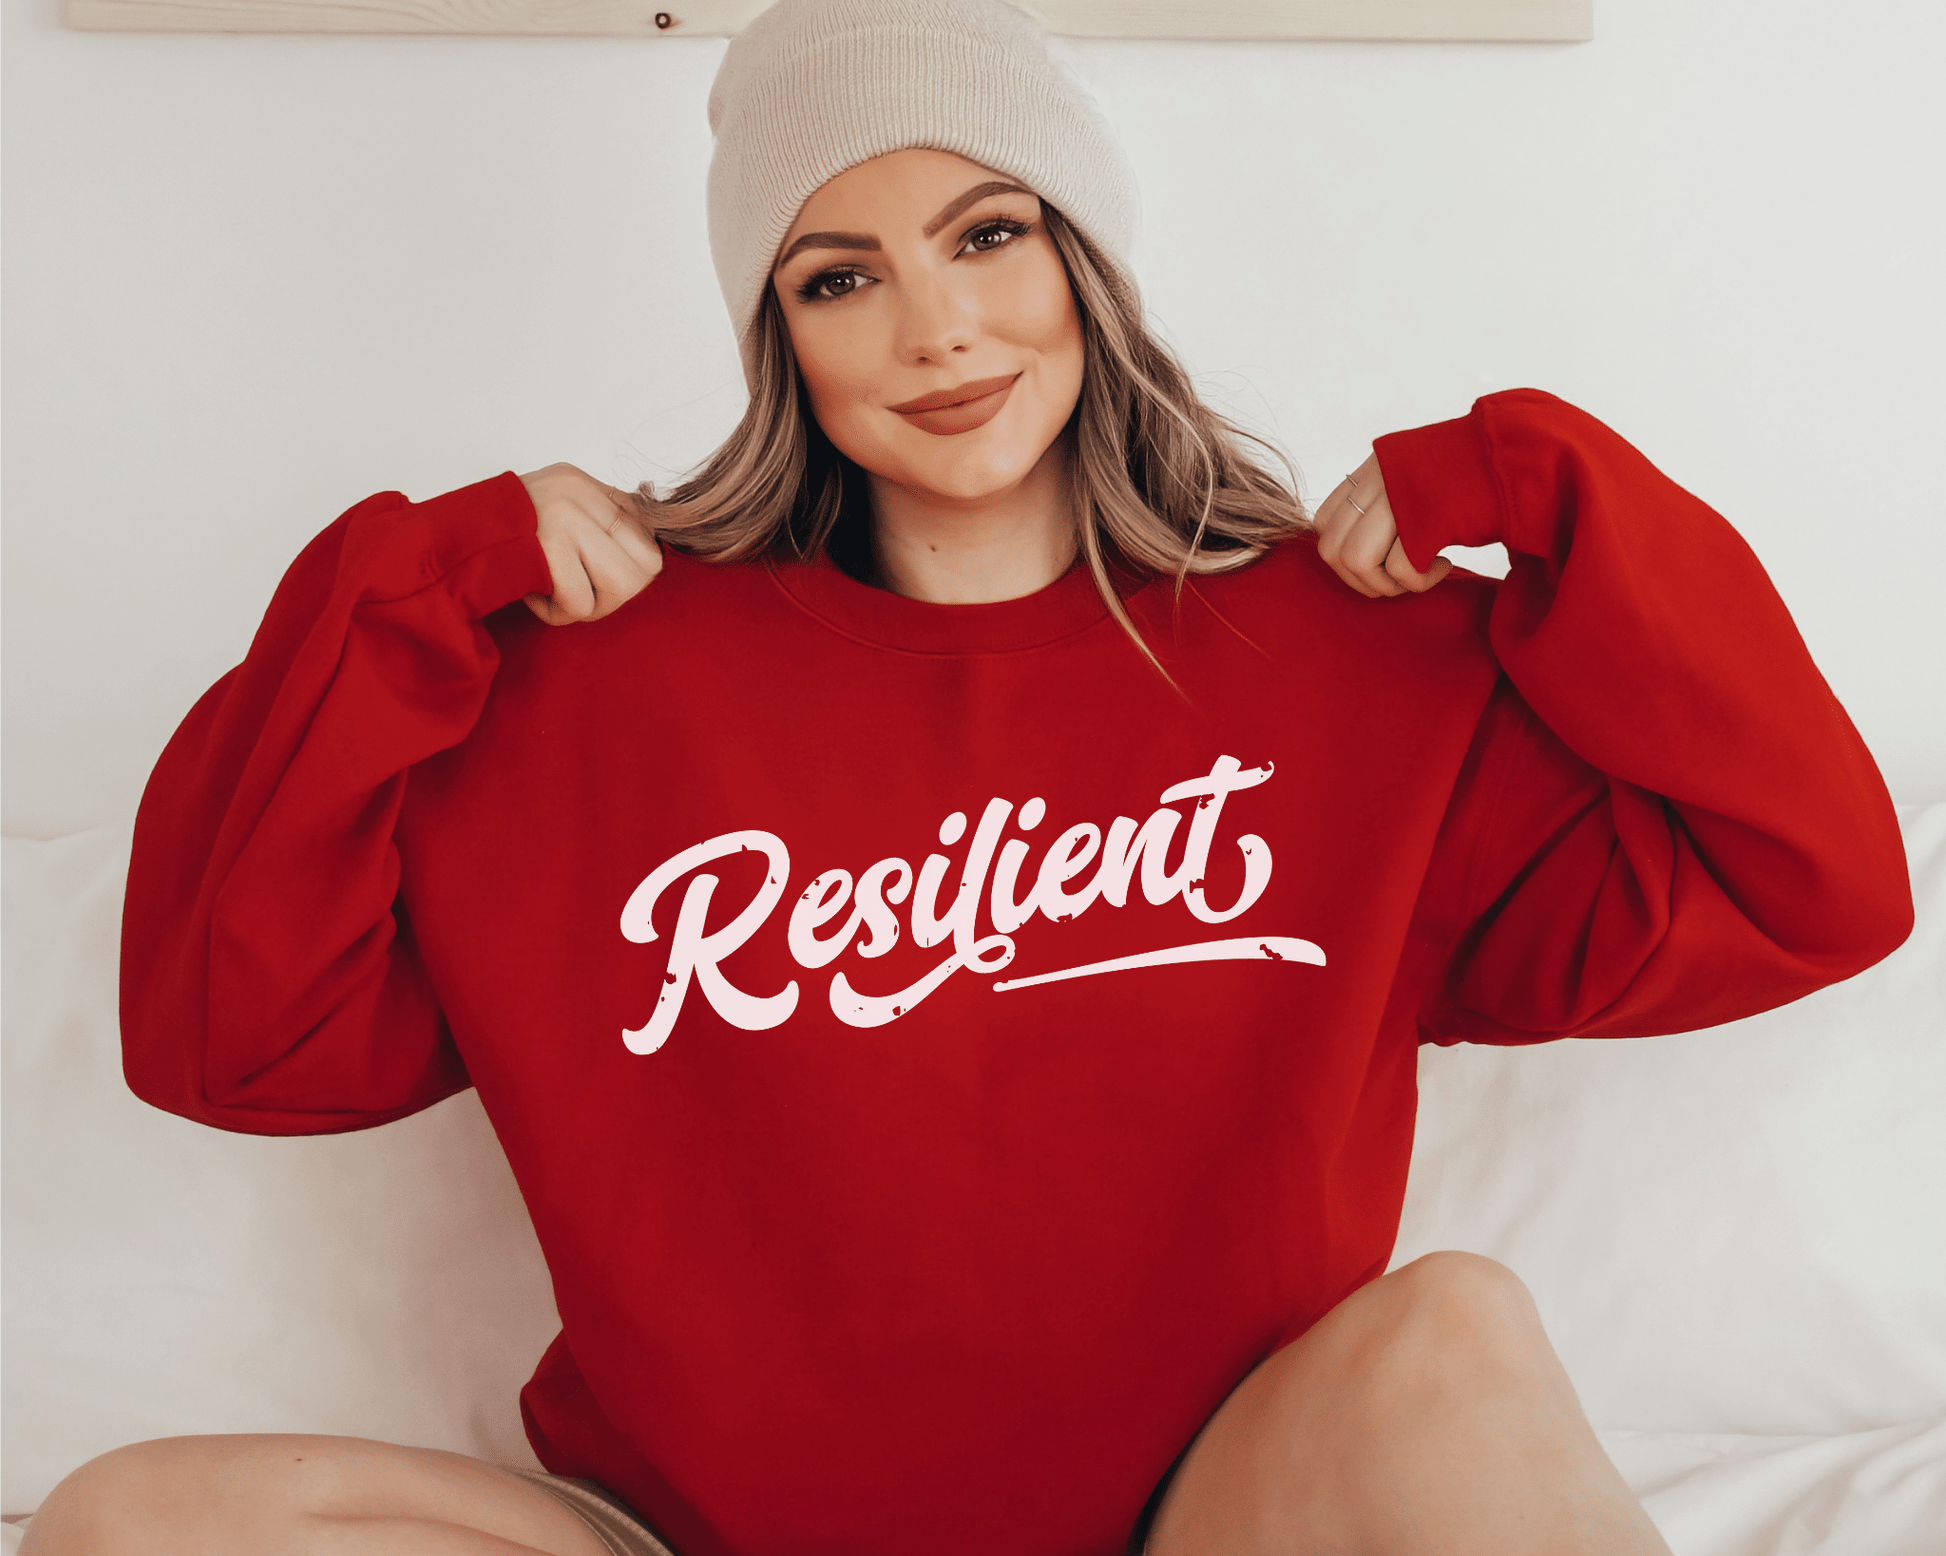 Resilient Sweatshirt in Red